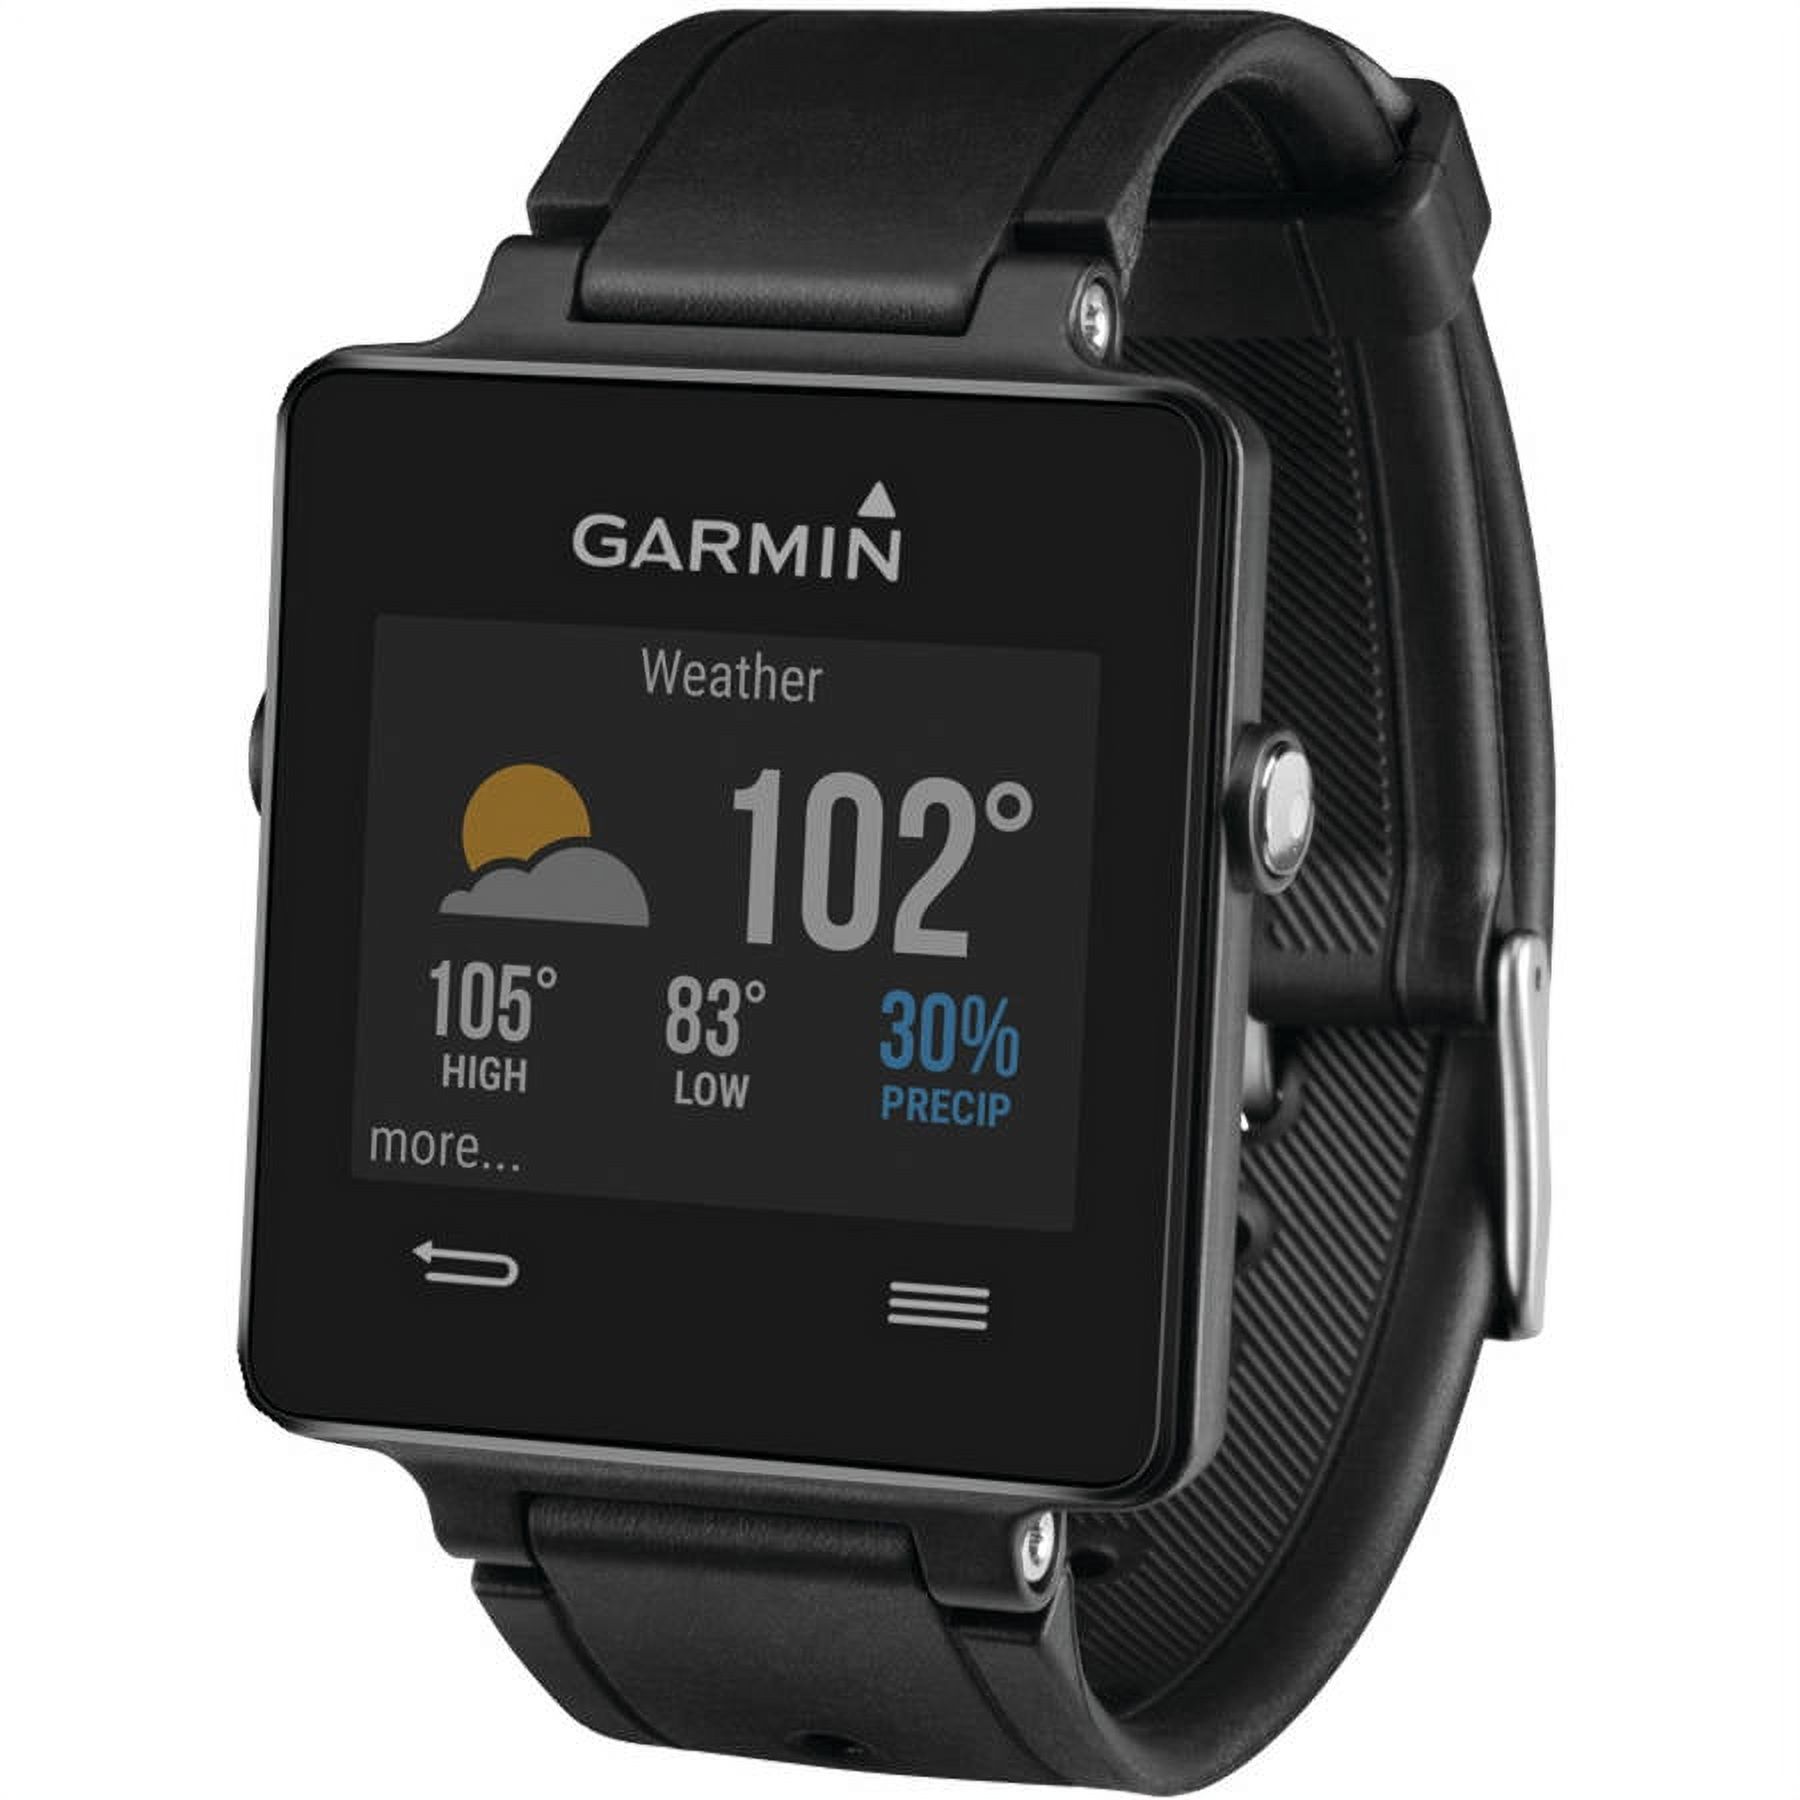 Garmin Vivoactive Smartwatch GPS / Activity Tracker / Pedometer / Sleep Monitor with Phone Notifications, Black (fits wrists 5.35-9.25") - image 1 of 3